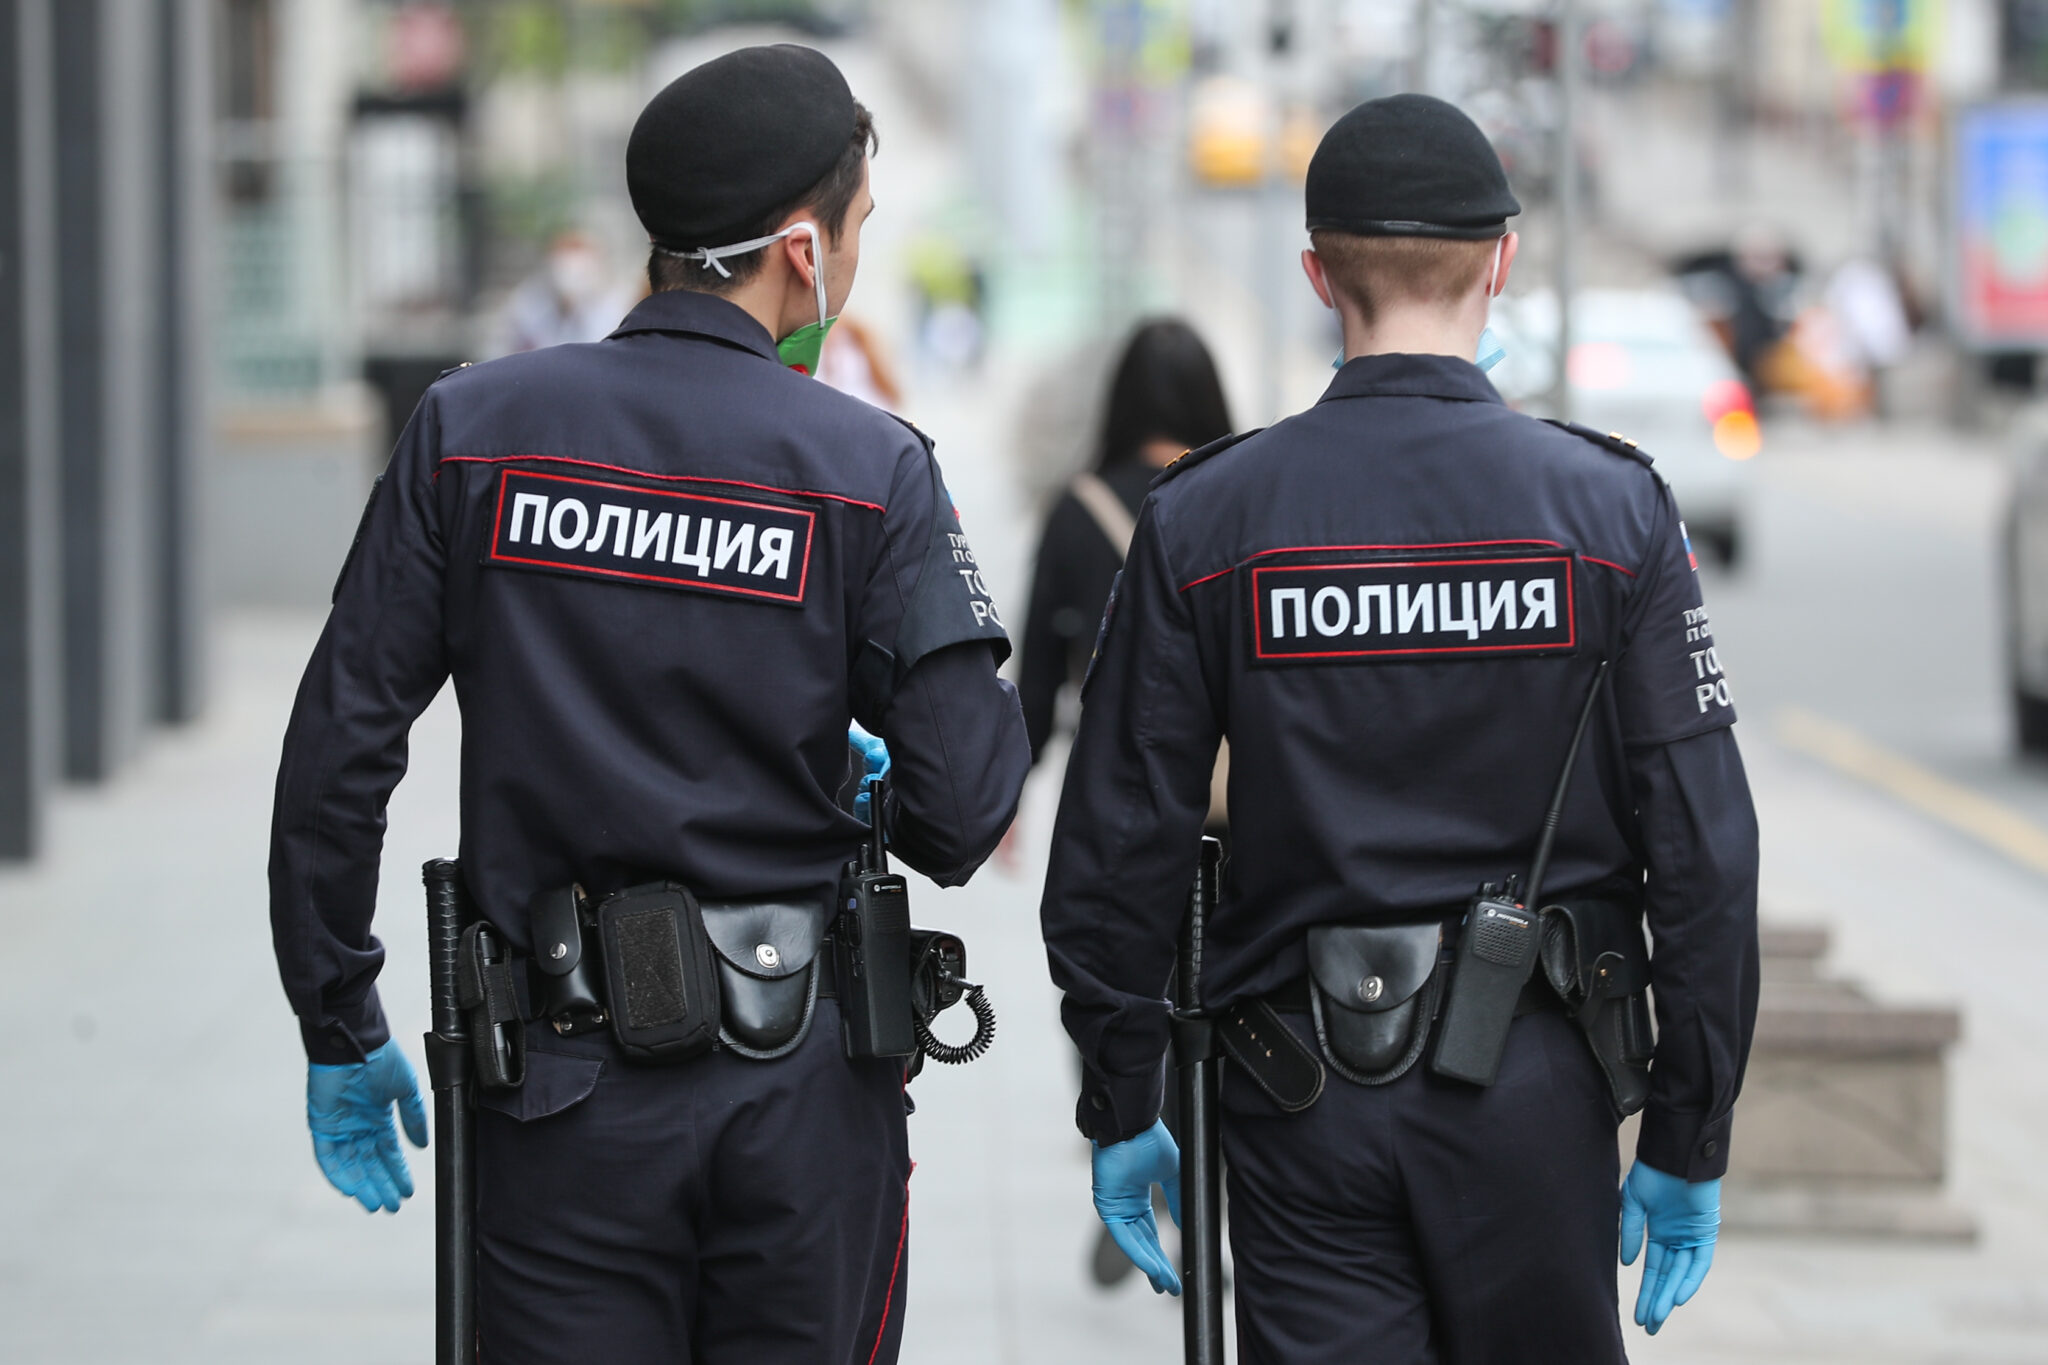 Полицейские. Фото Mikhail Tereshchenko / TASS / Scanpix / Leta